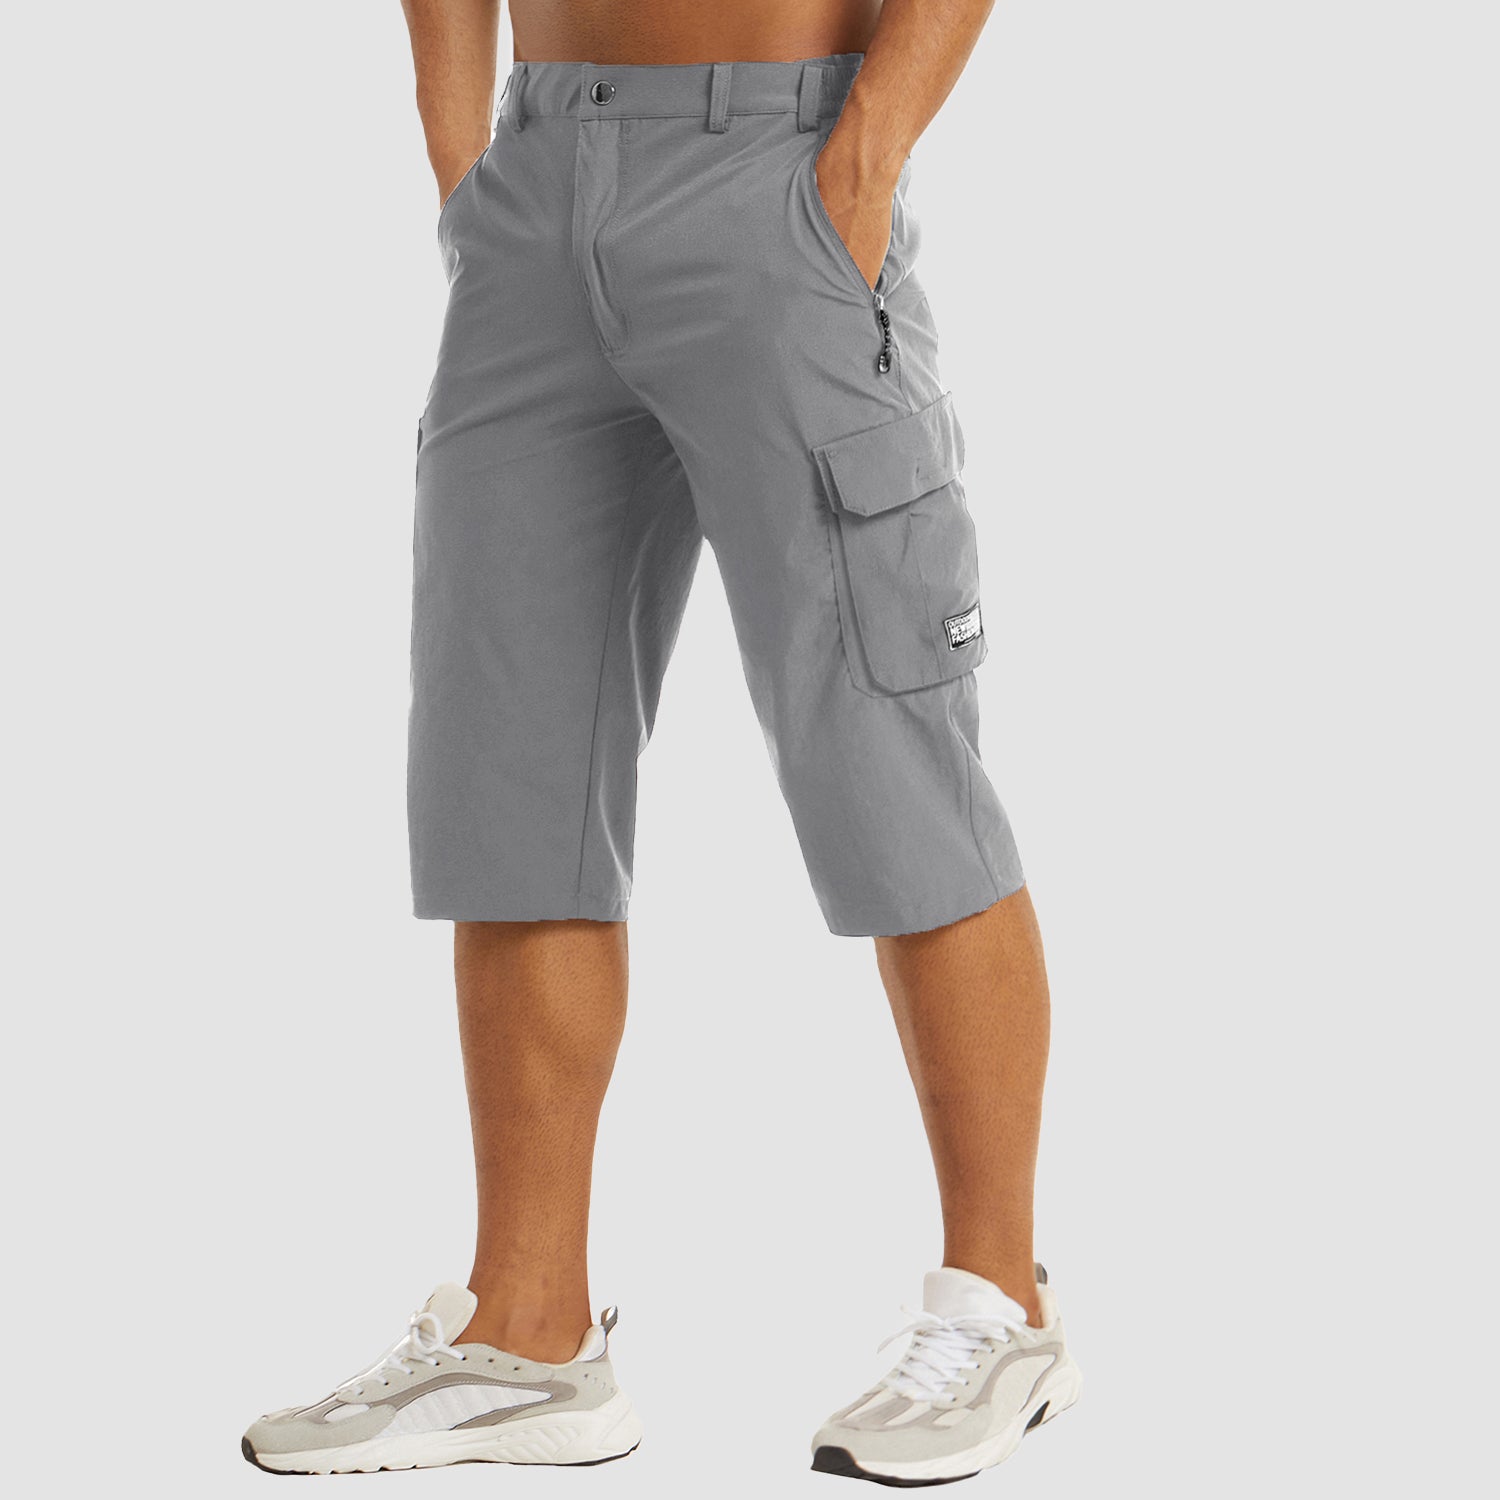 Men's Bottom Wear, Pants, Cargo, Running & Shorts